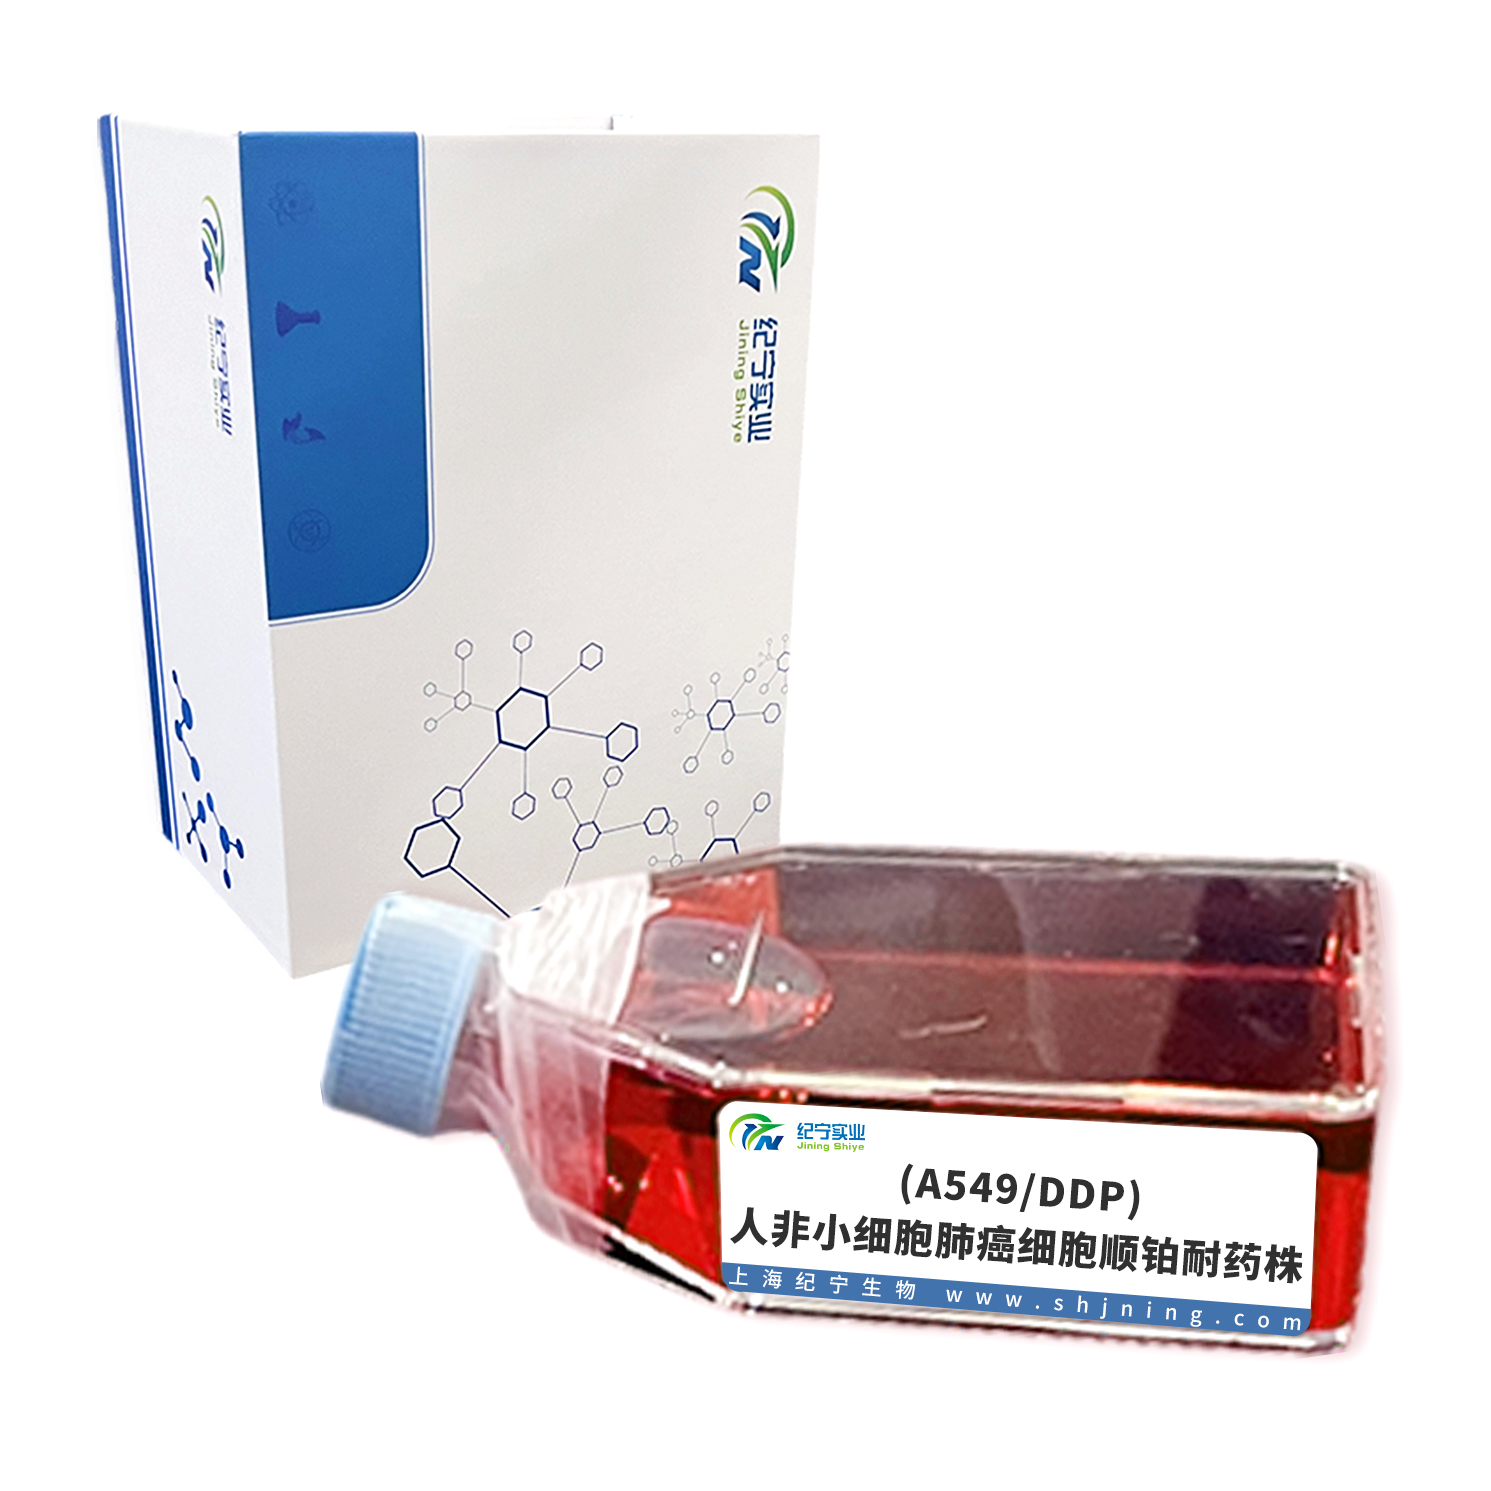 (A549/DDP)人非小细胞肺癌细胞顺铂耐药株